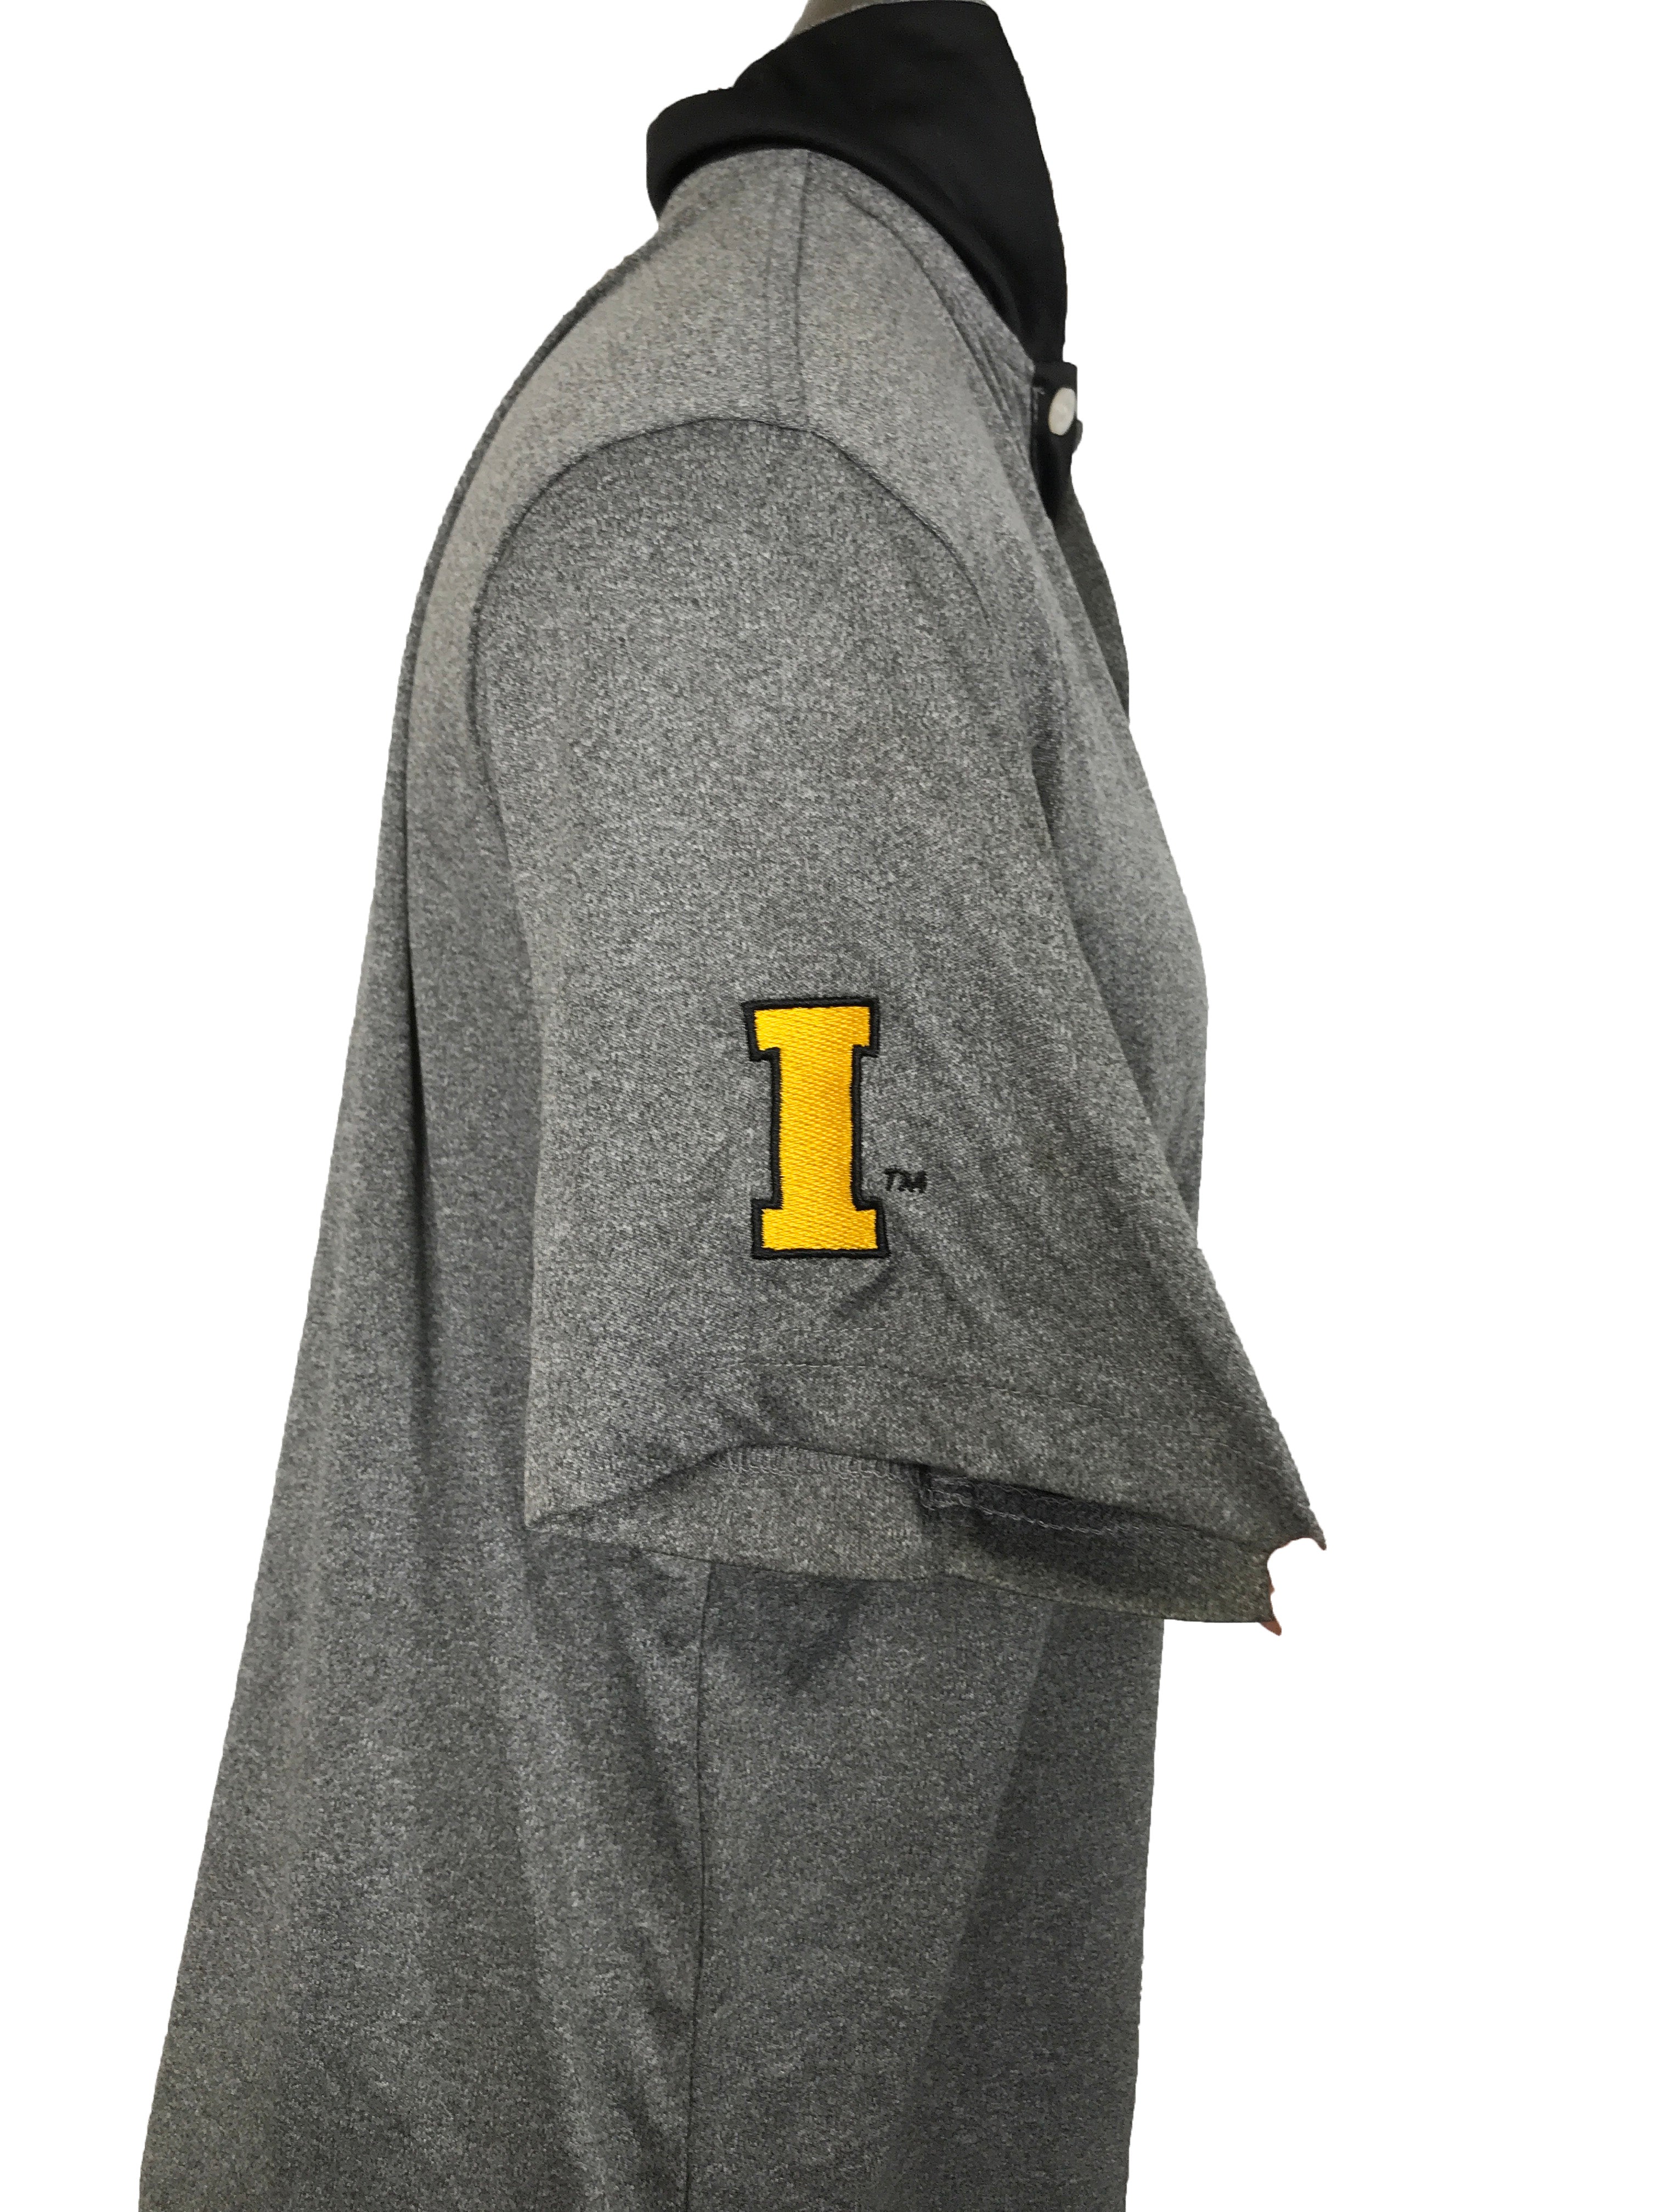 Grey Collared Shirt Iowa Football Men's Size S